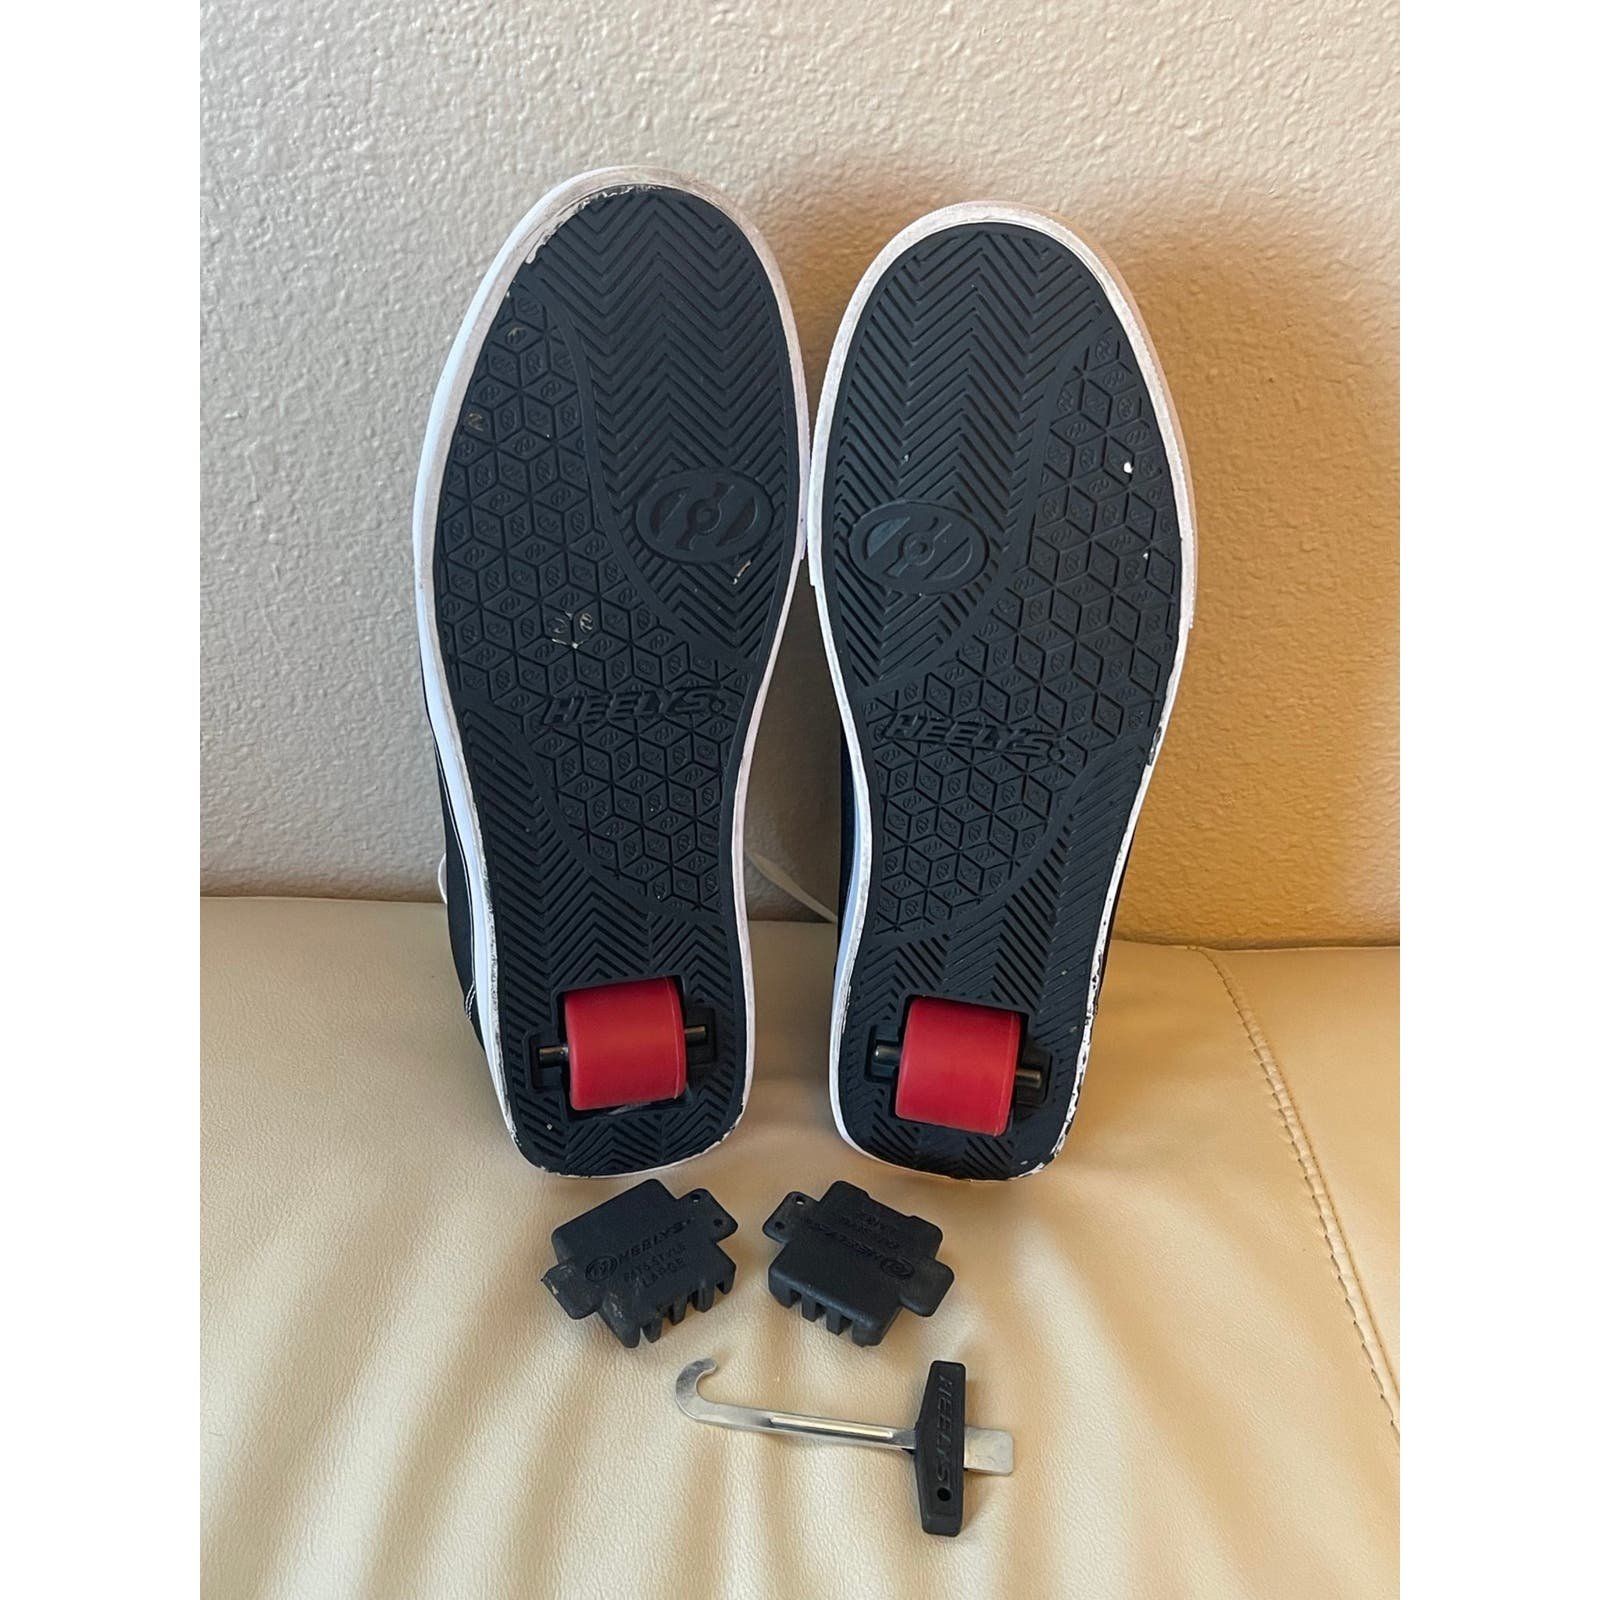 HEELYS Black & Red Pro 20 Wheeled Heel Shoe Adult Men Size 12 bYhGFfeZe